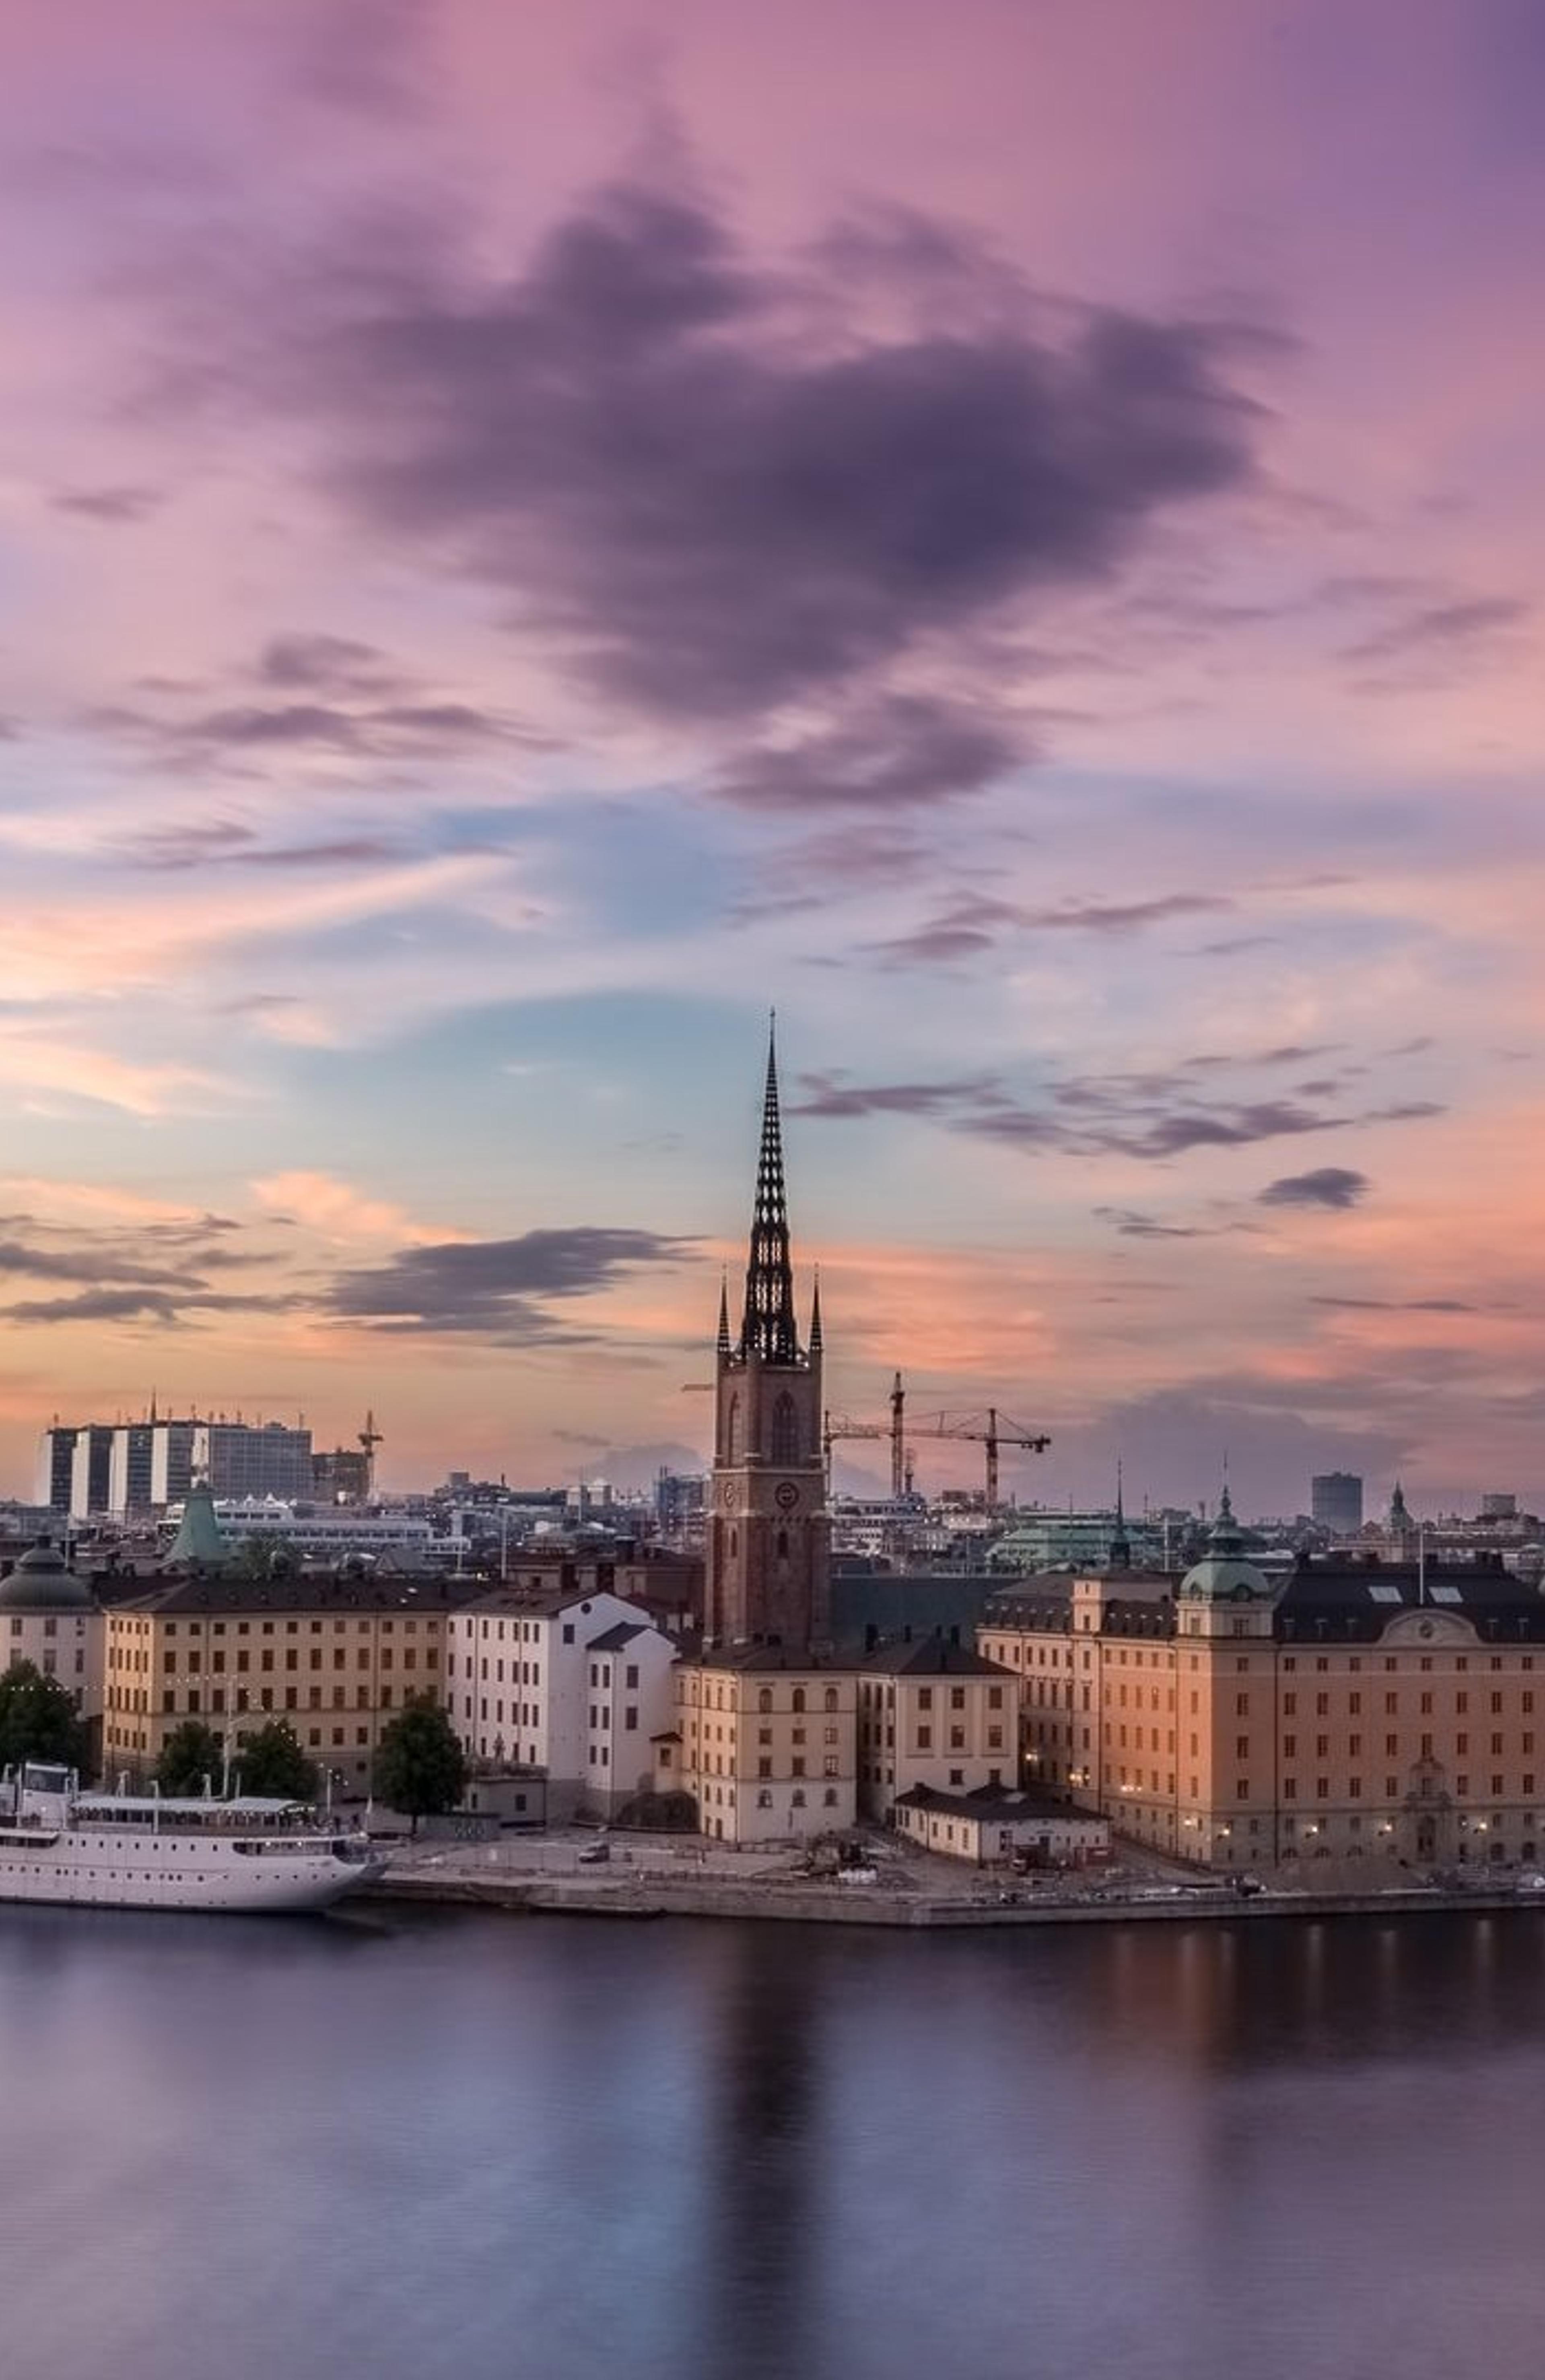 Stockholm city from the shoreline, Sweden